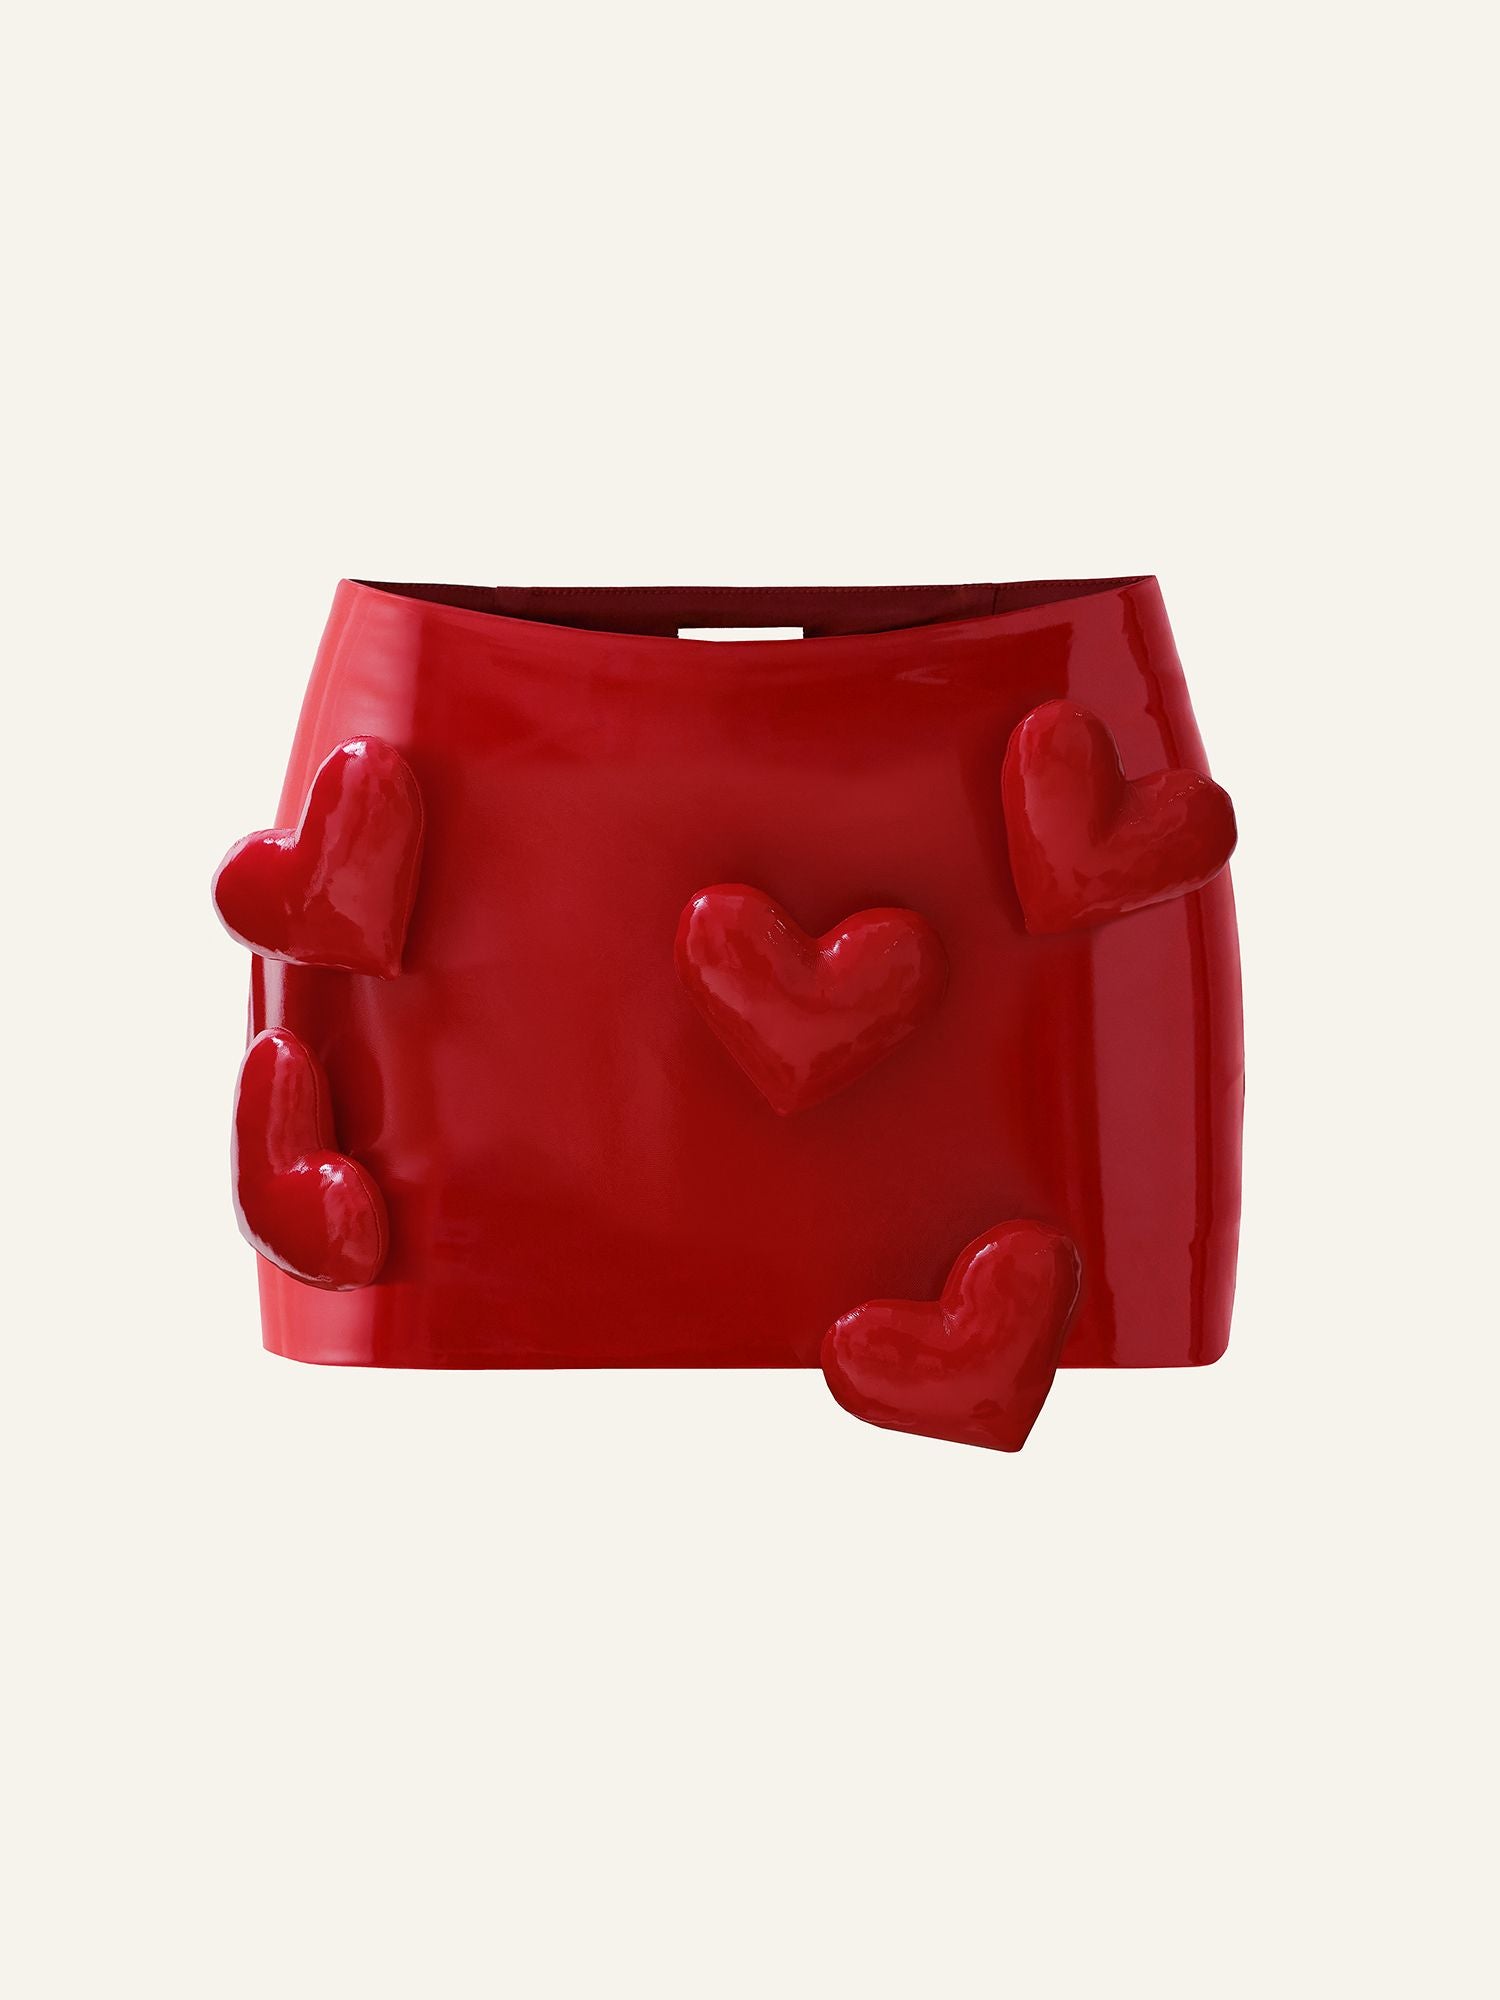 Love Mini Mini skort in Red patent